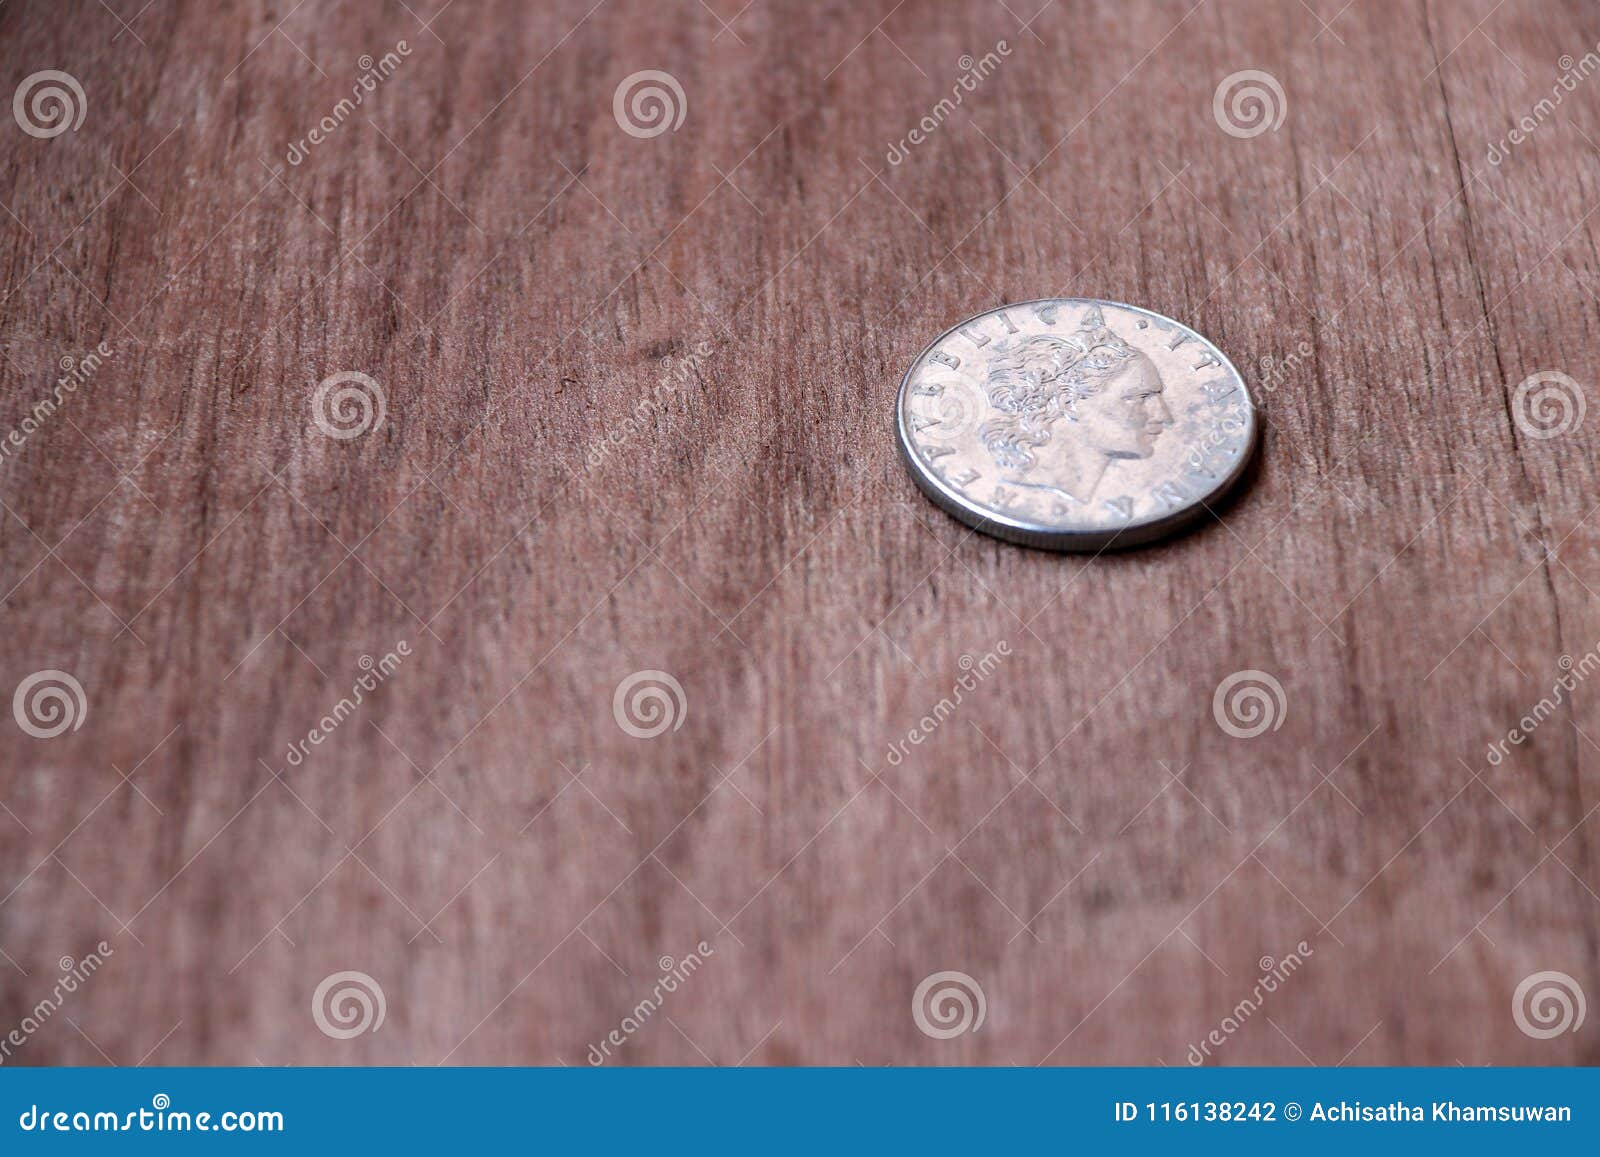 repvbblica italiana, coin of italy on the wooden floor, 50 lire